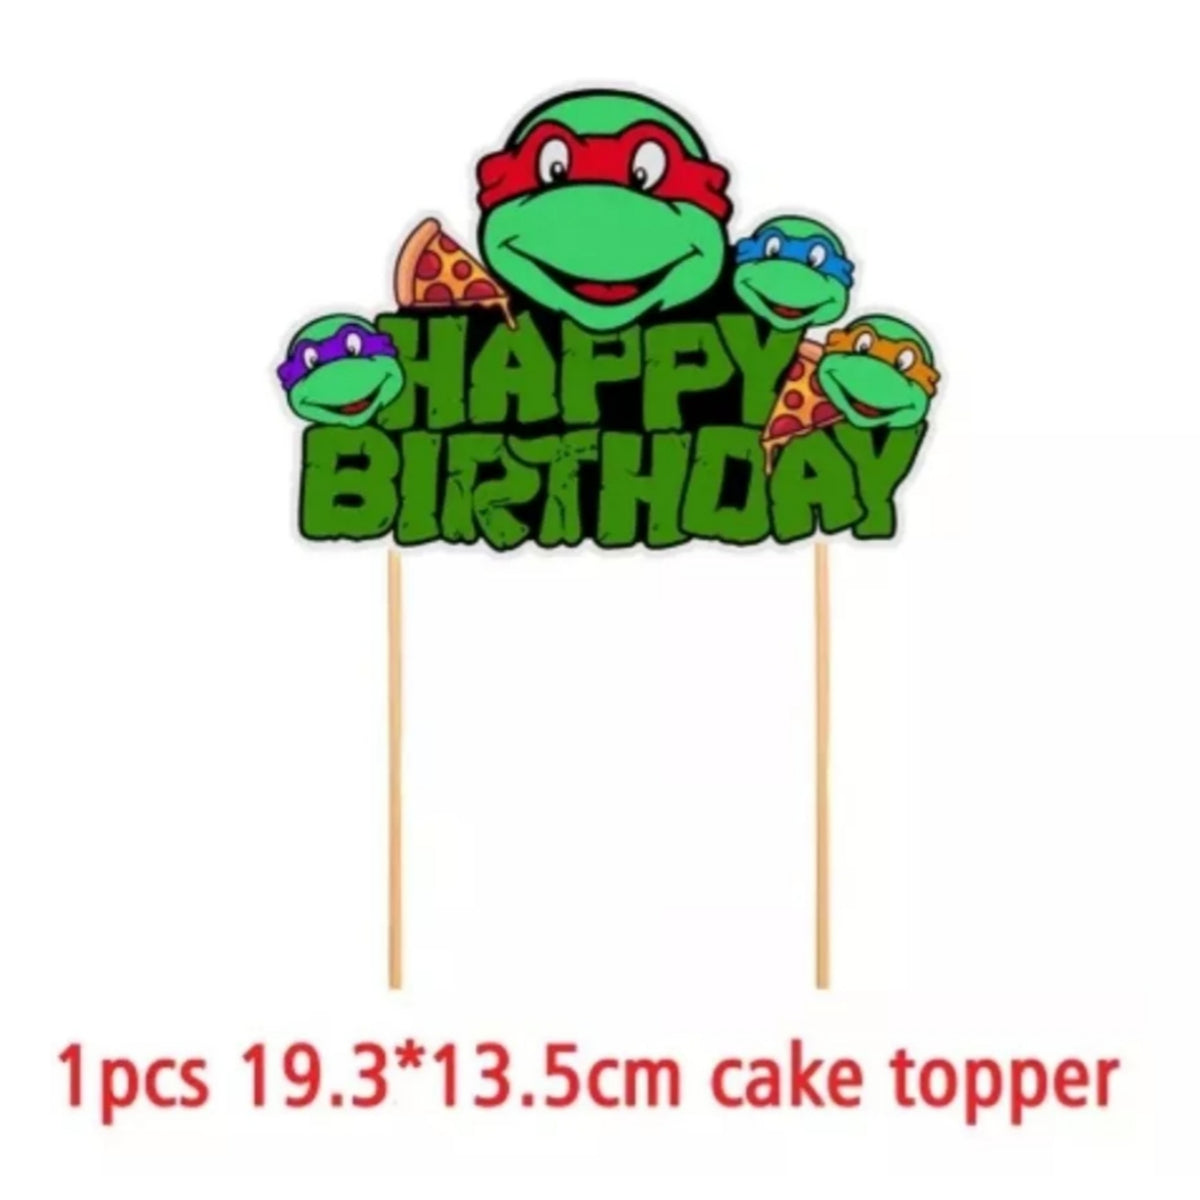 Set decoración cumpleaños tortugas ninja 30 pcs